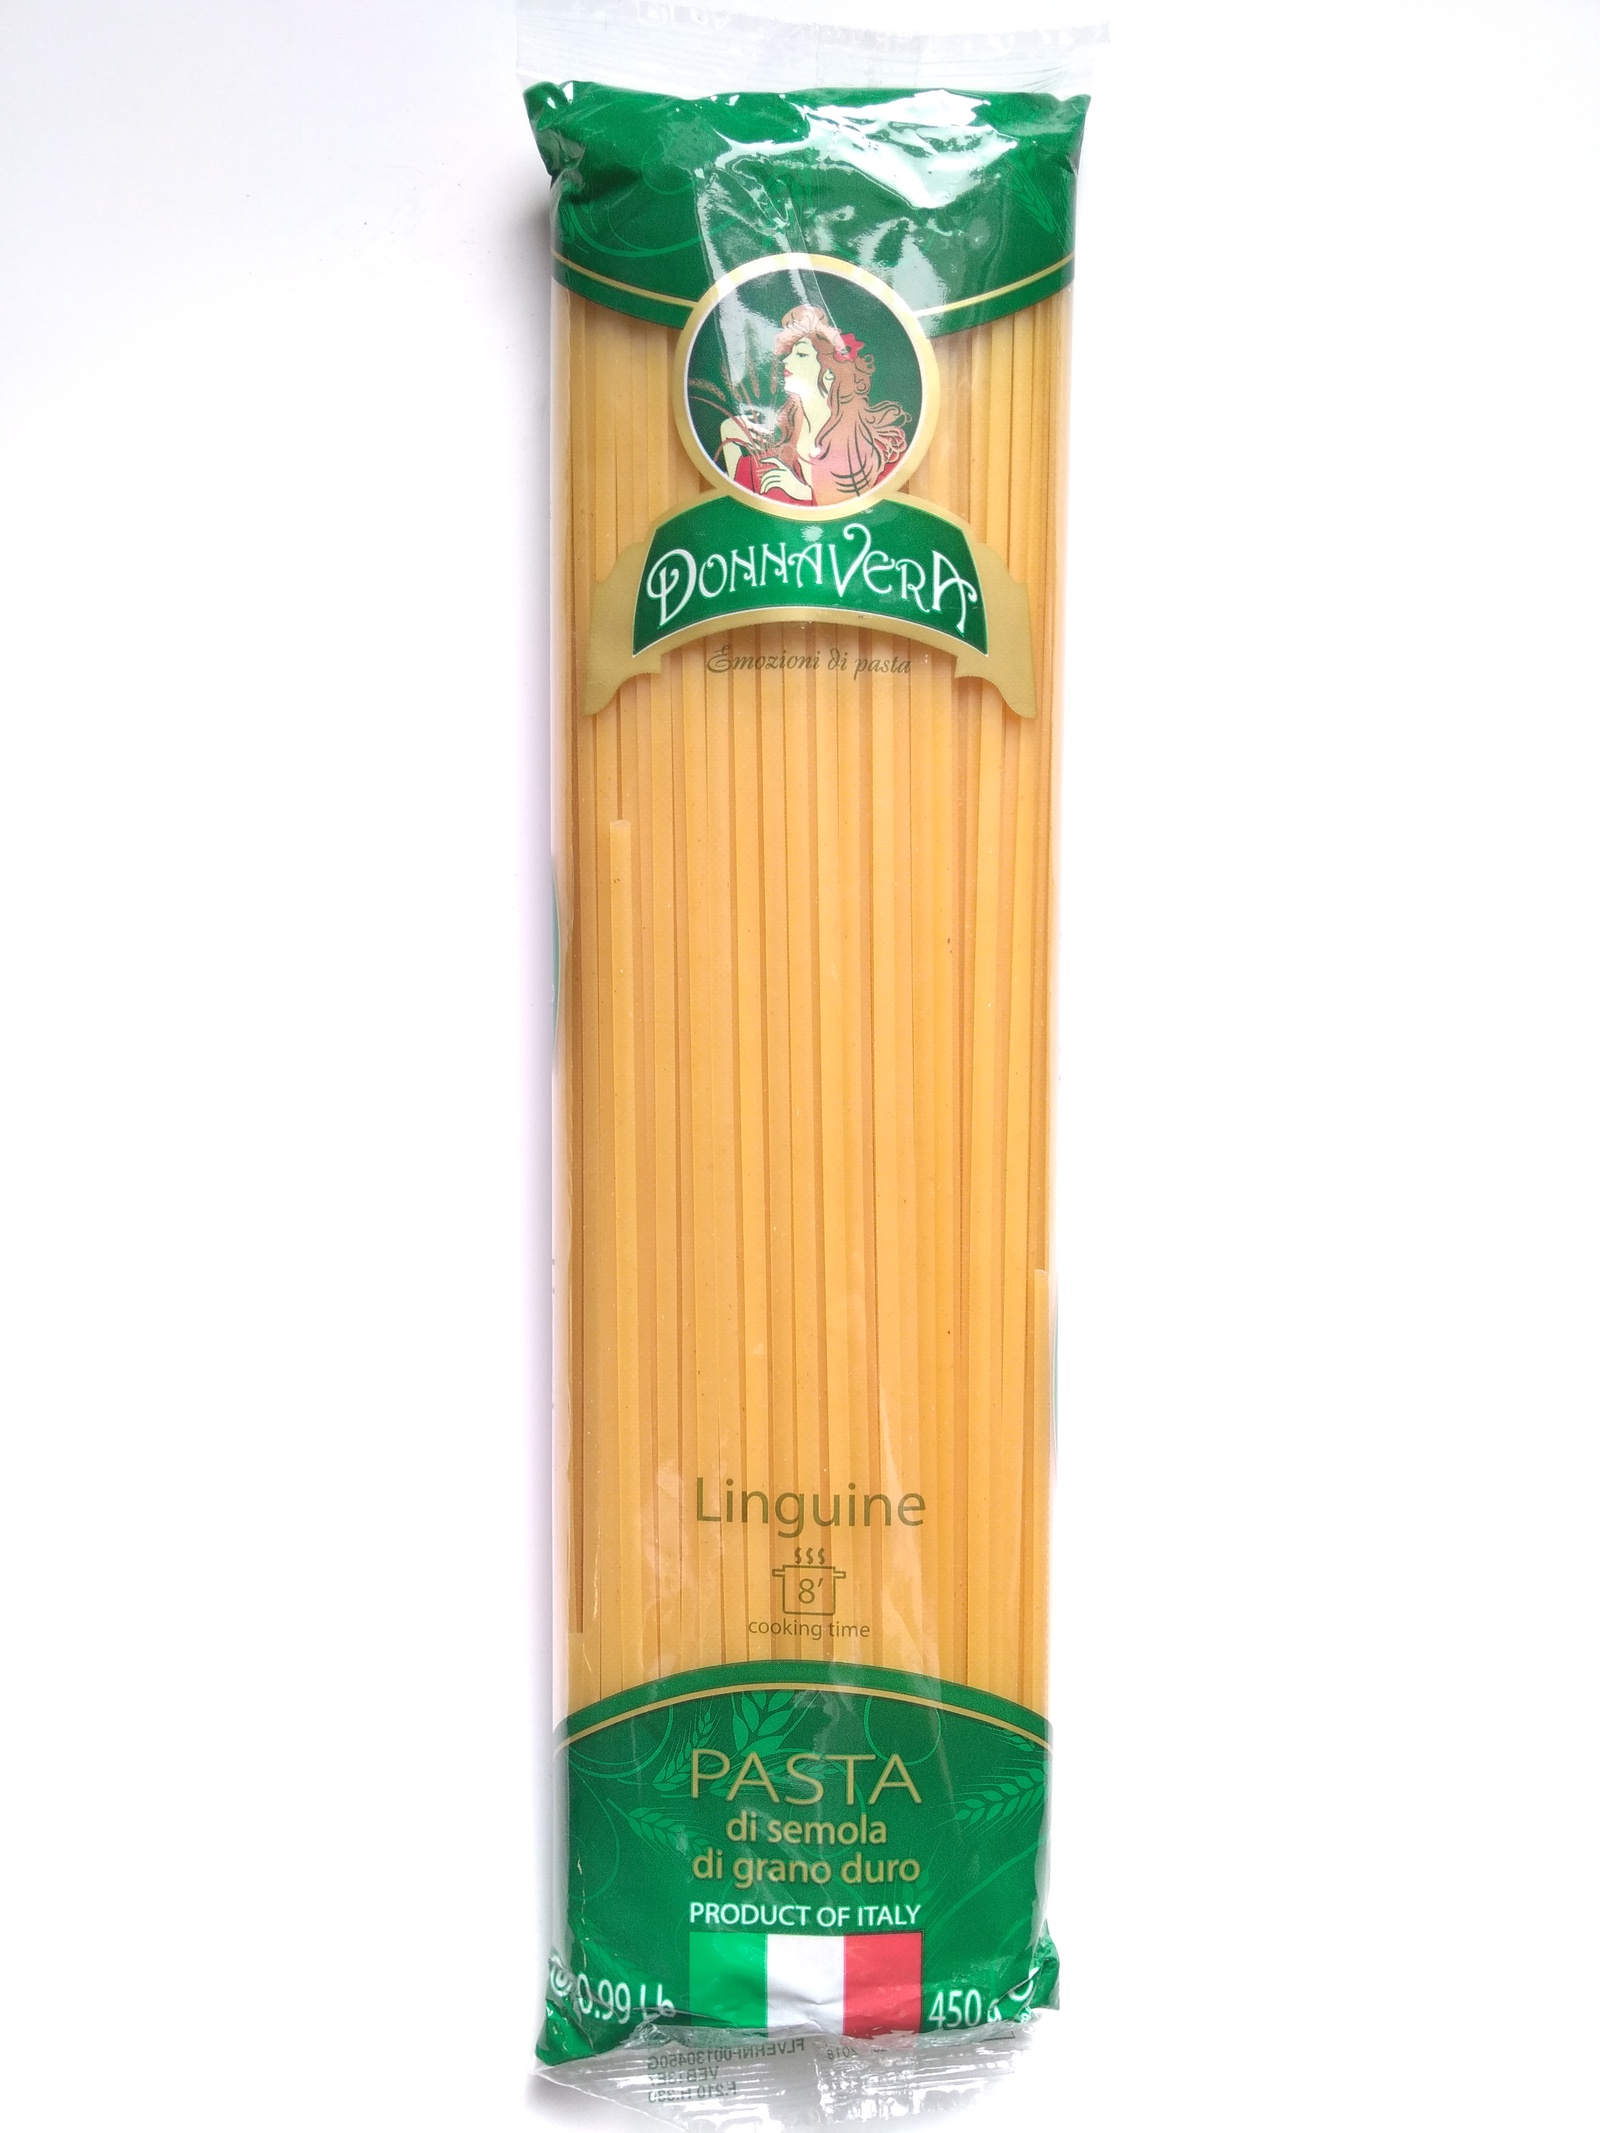 Фото спагетти в упаковке фото